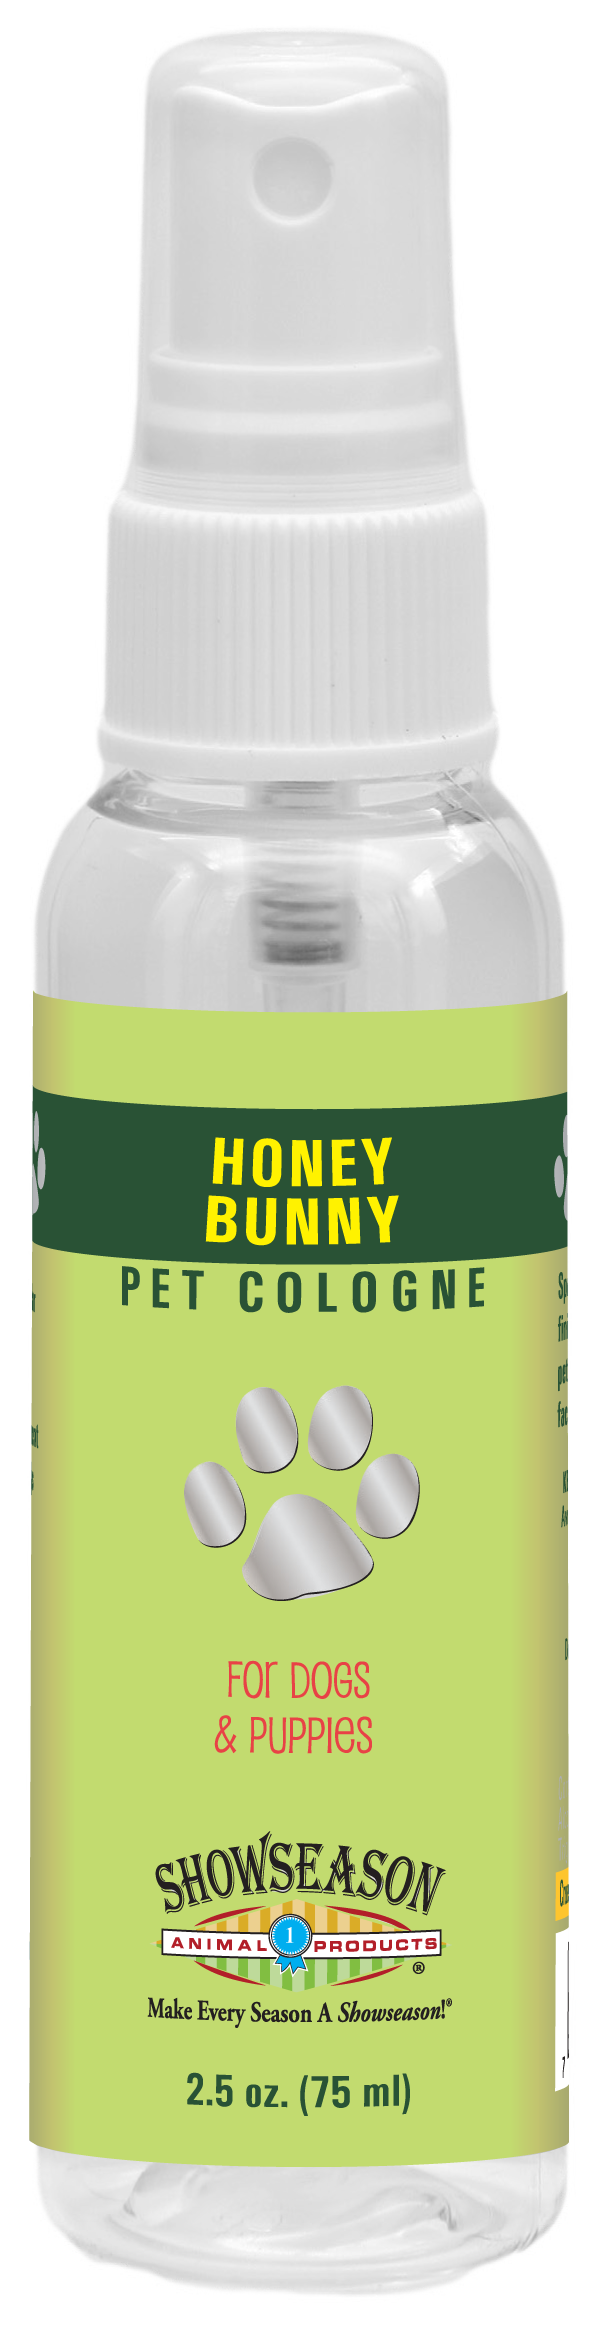 Honey Bunny Pet Cologne